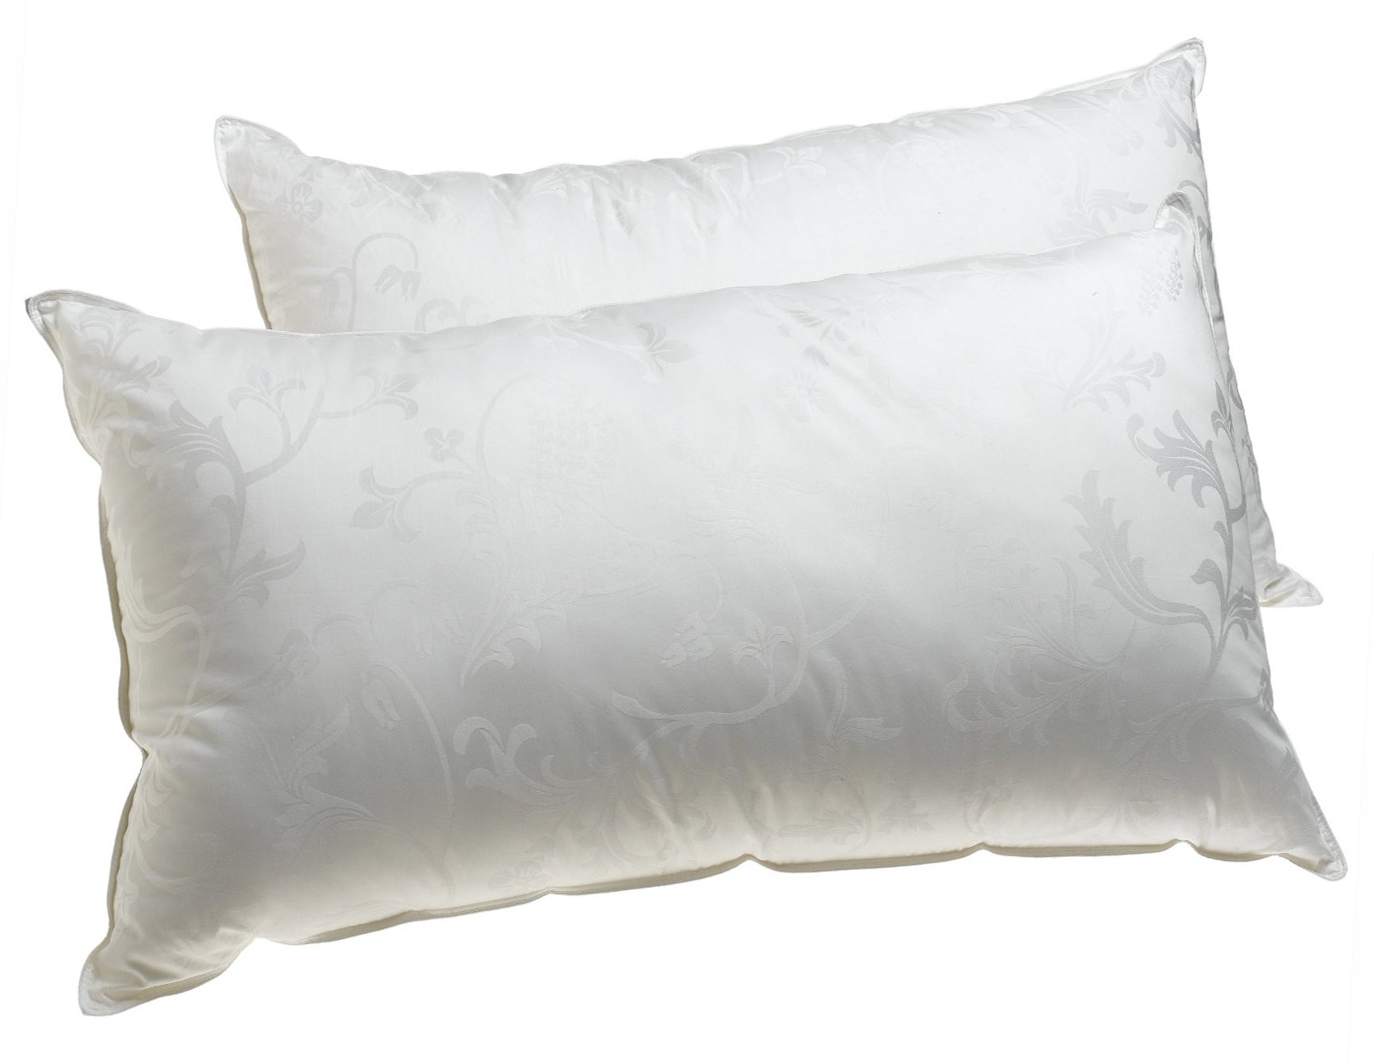 DeluxeComfort Dream Supreme Plus Gel Fiber-Filled Pillows